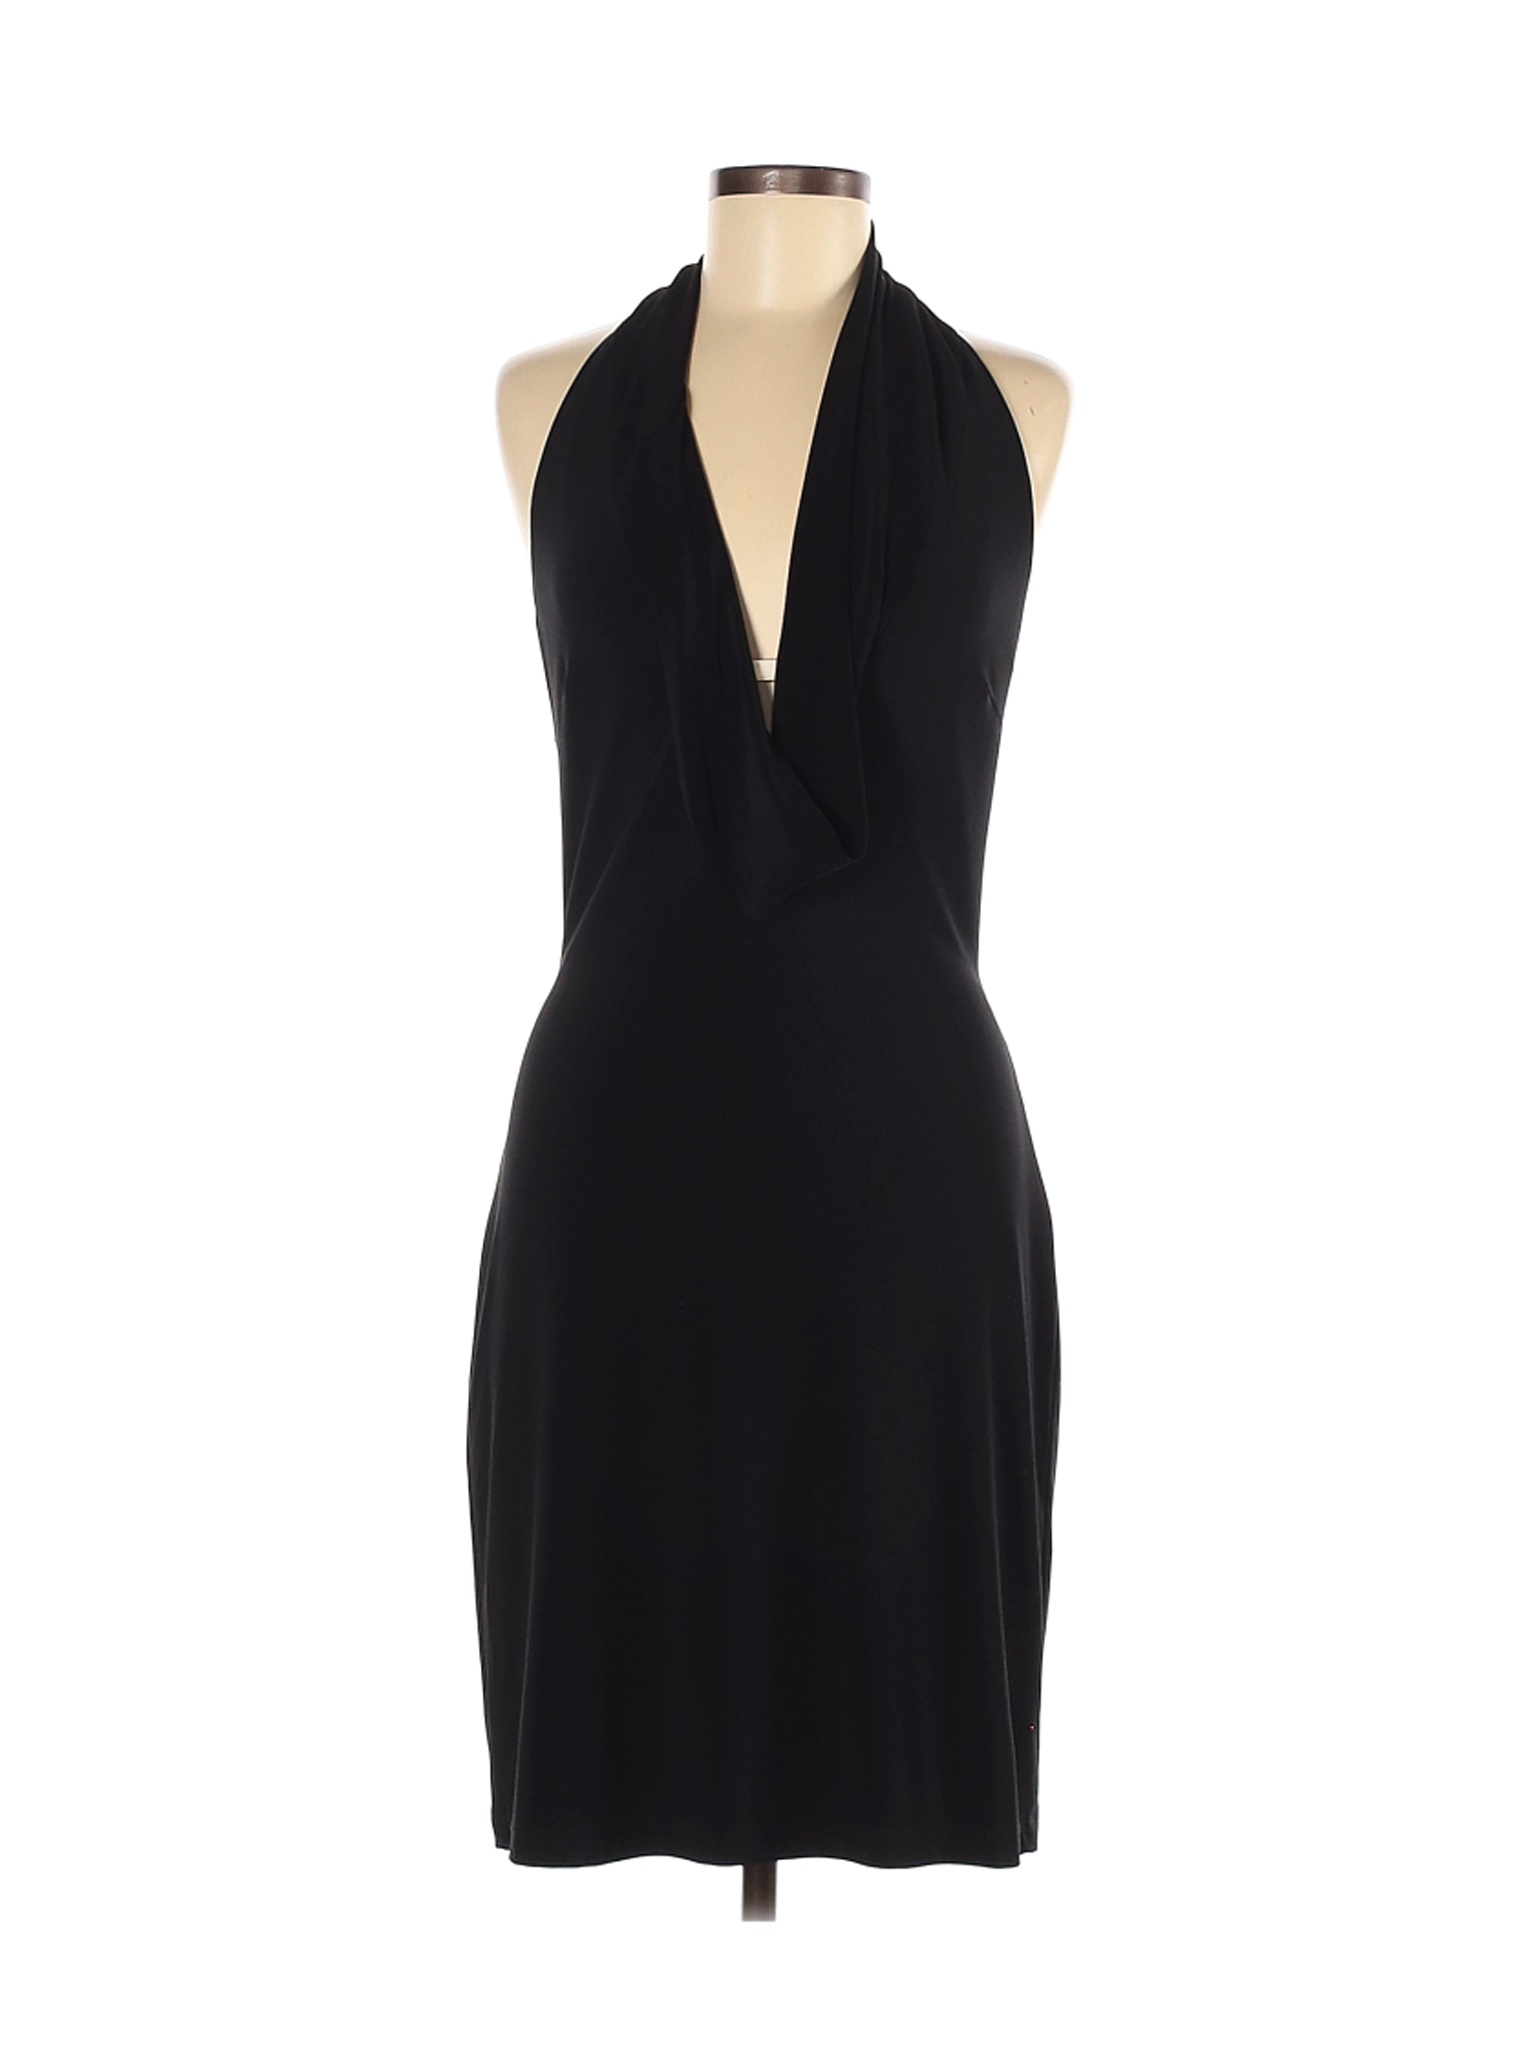 Cache Women Black Cocktail Dress 8 | eBay